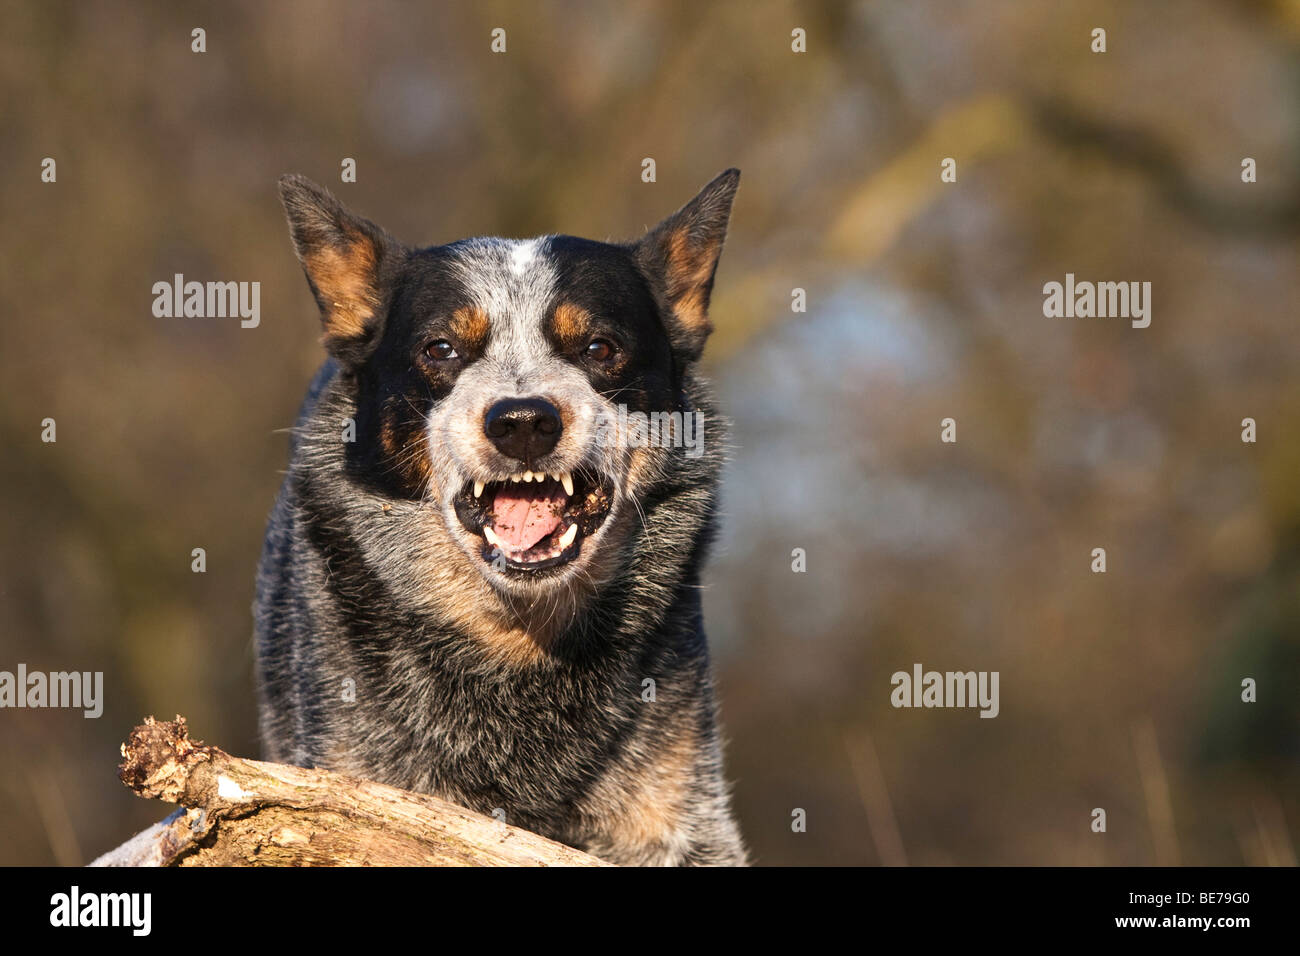 Dangerous Aggressive Looking Australian Cattle Dog Stock Photo Alamy